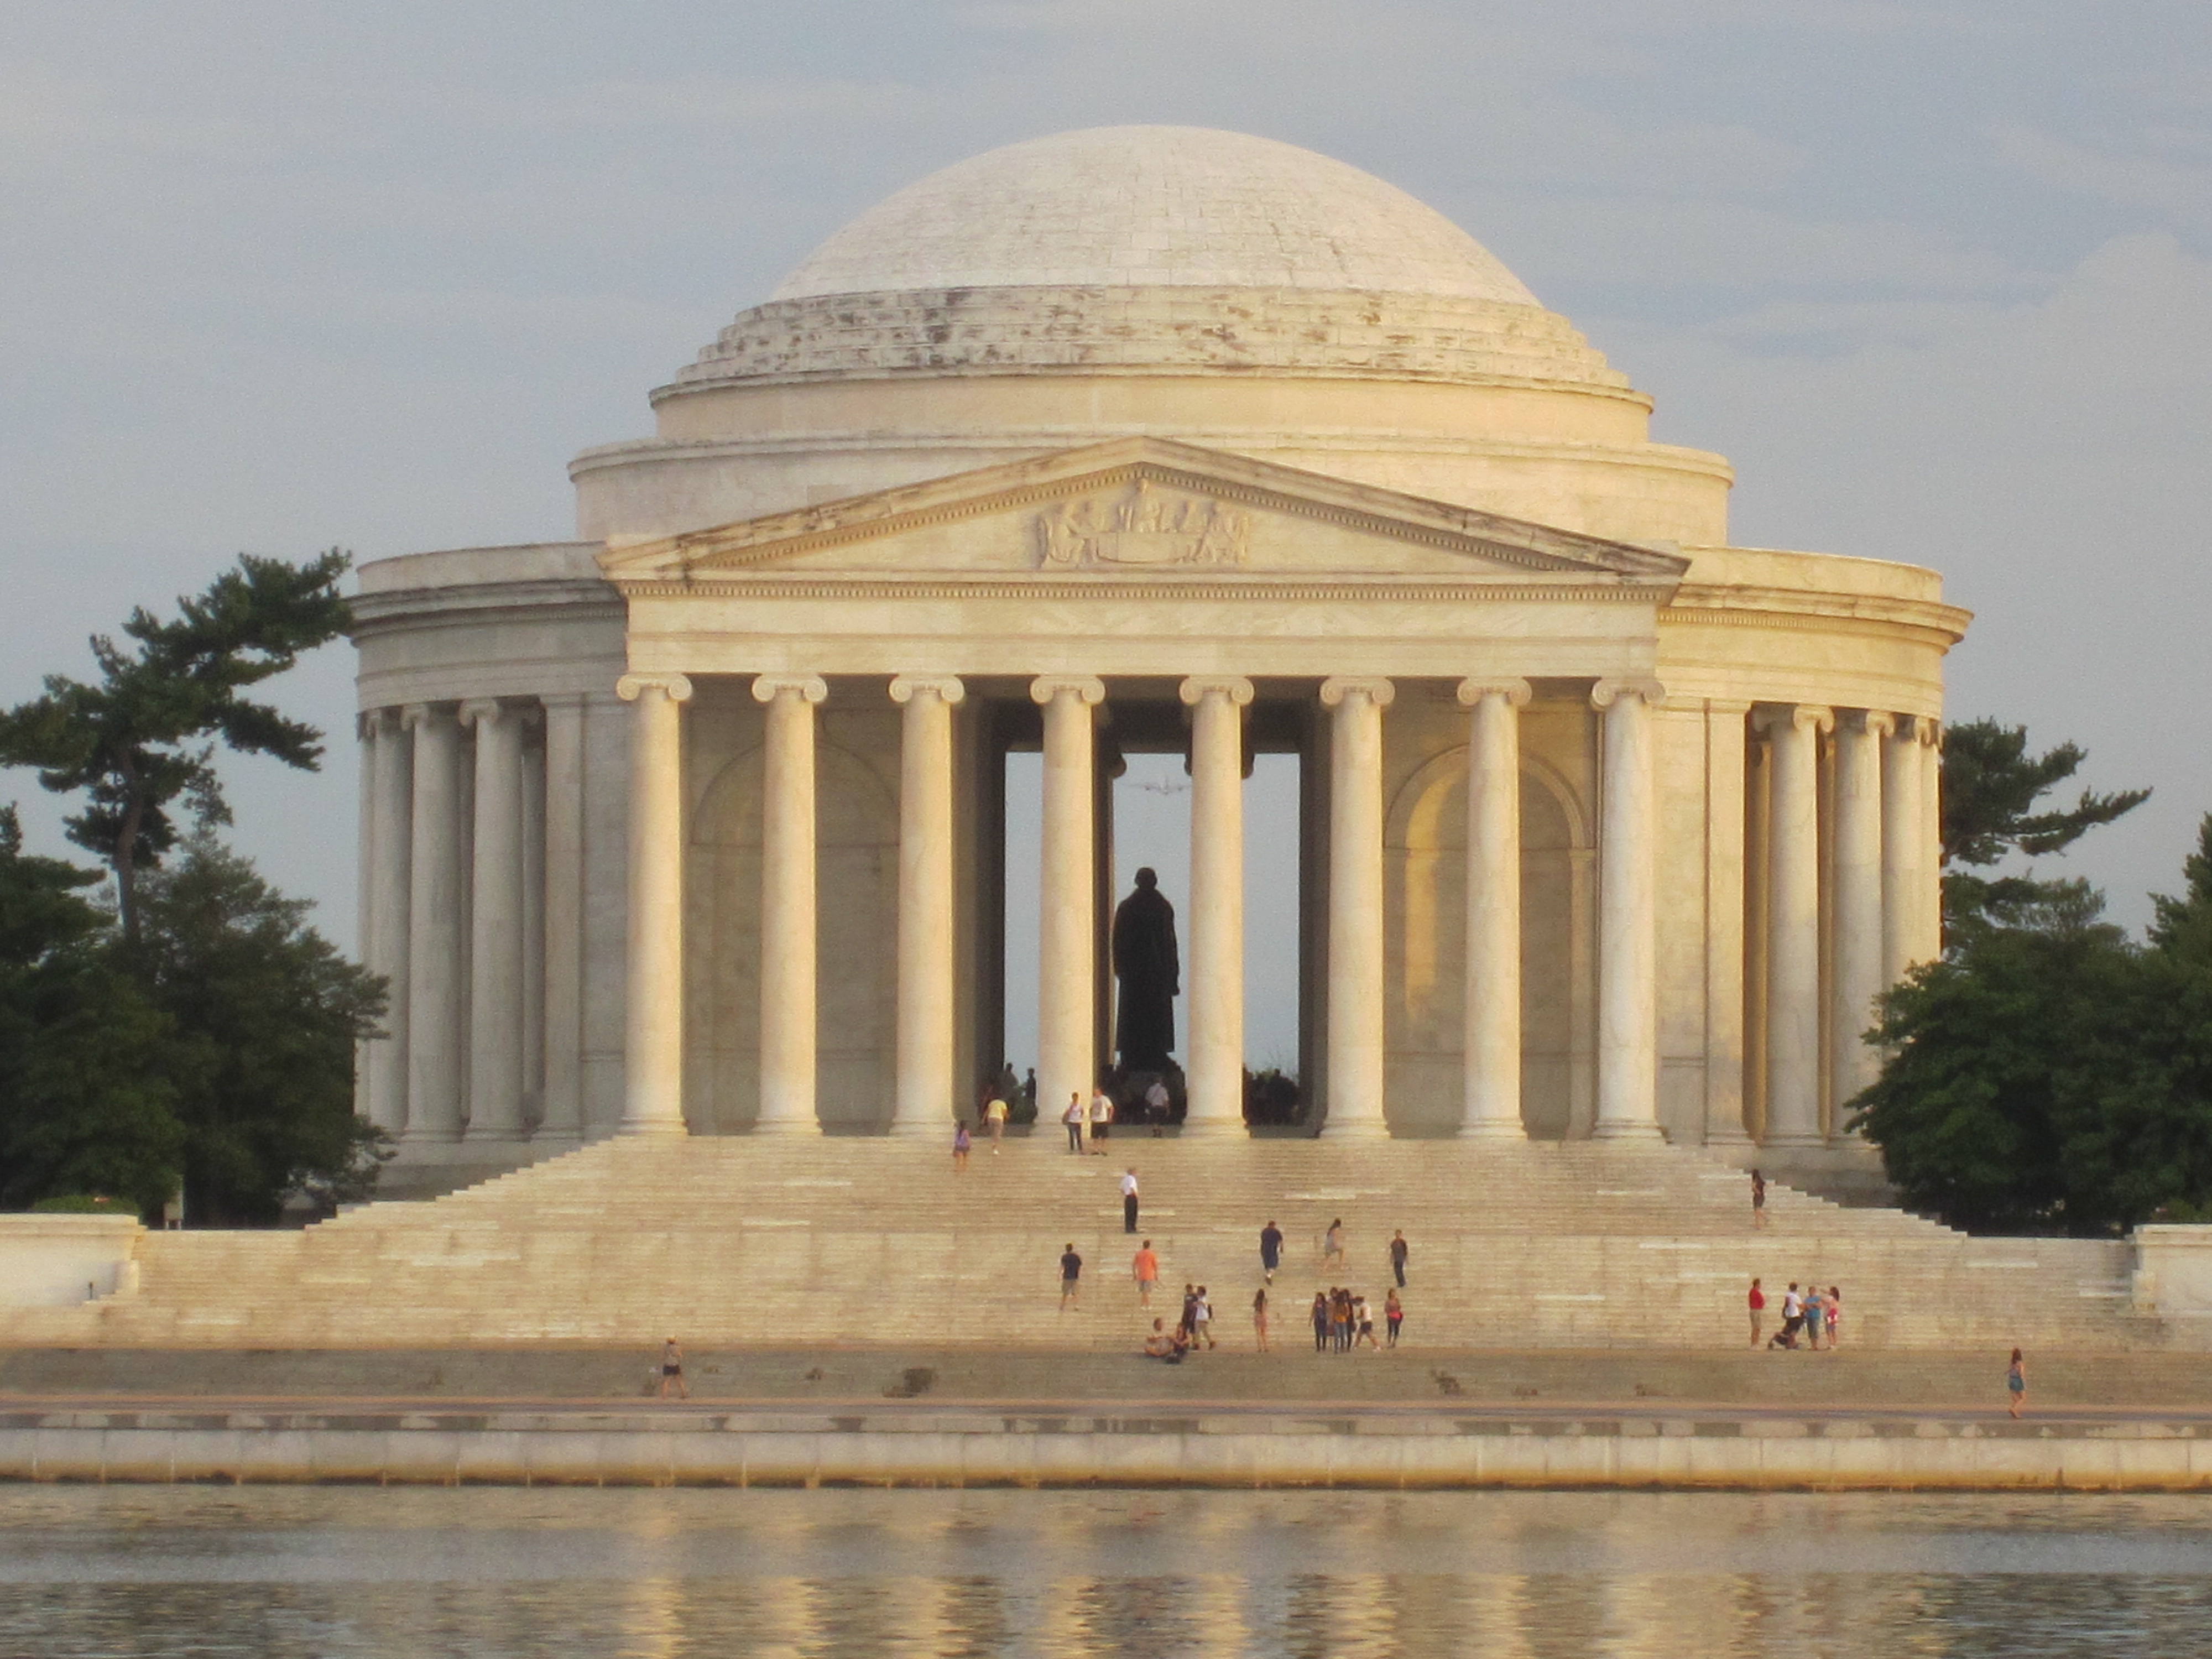 File:Jefferson Memorial, Washington, DC 2012.JPG - Wikimedia Commons